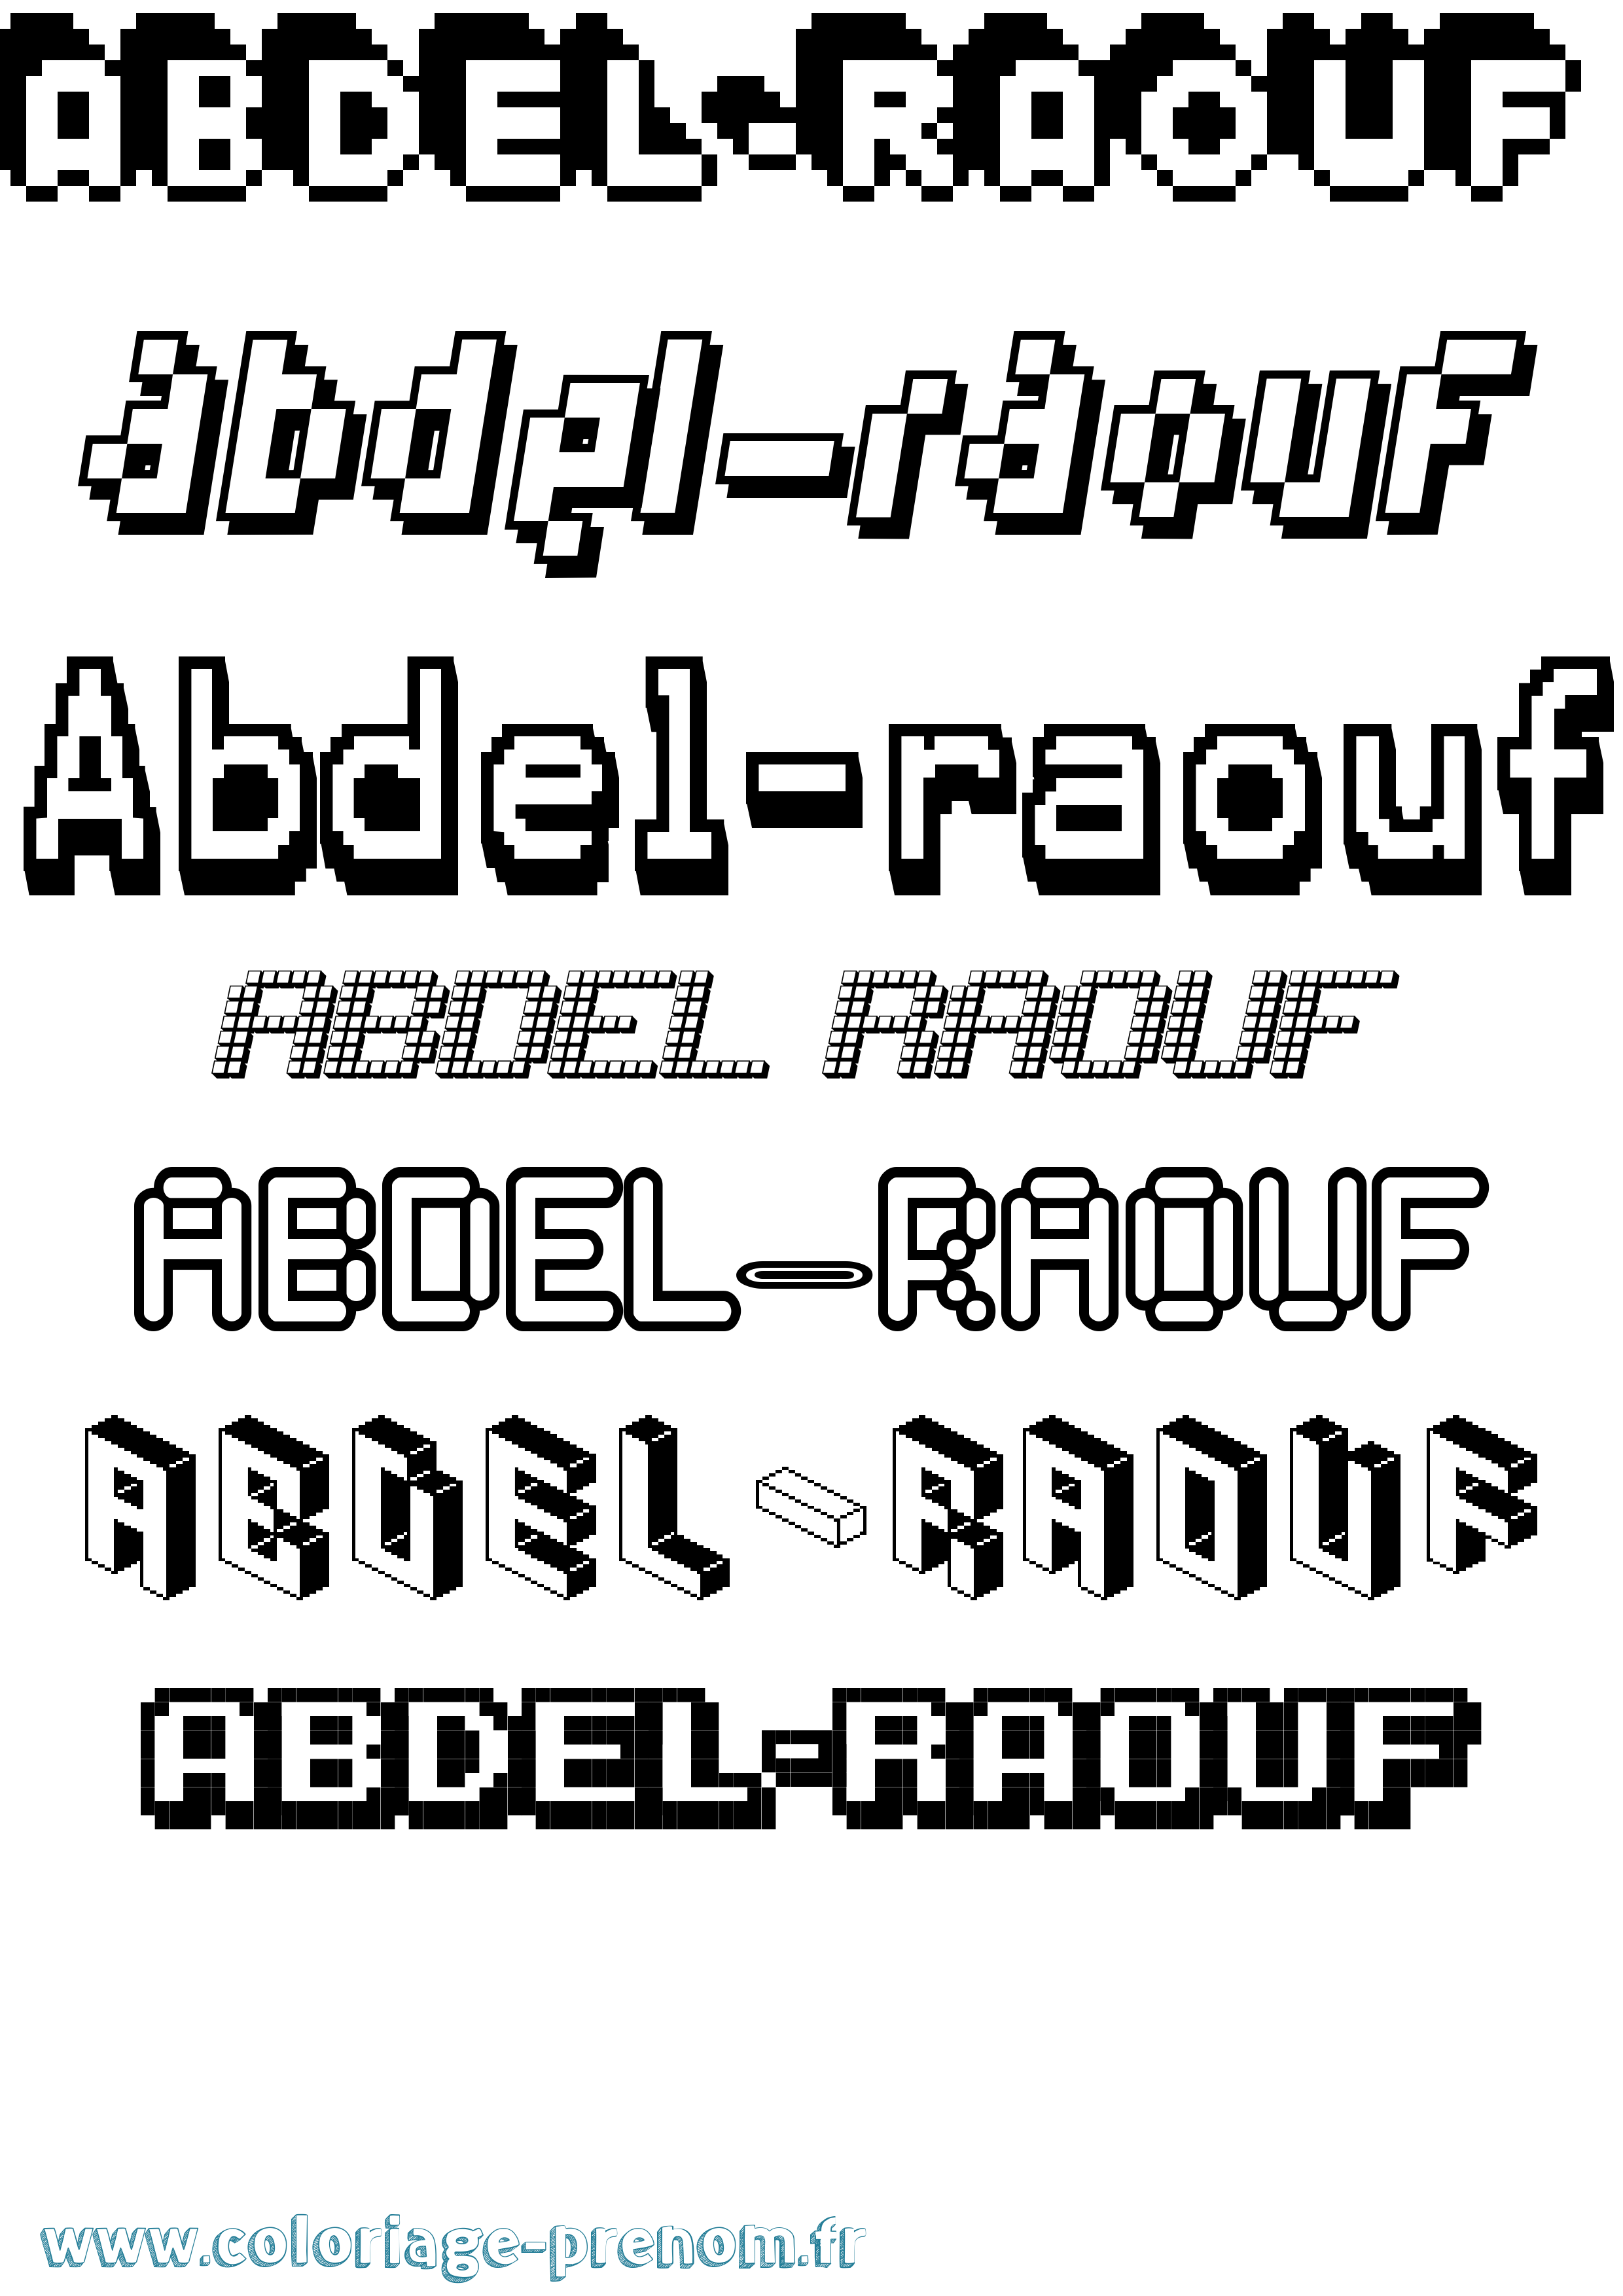 Coloriage prénom Abdel-Raouf Pixel